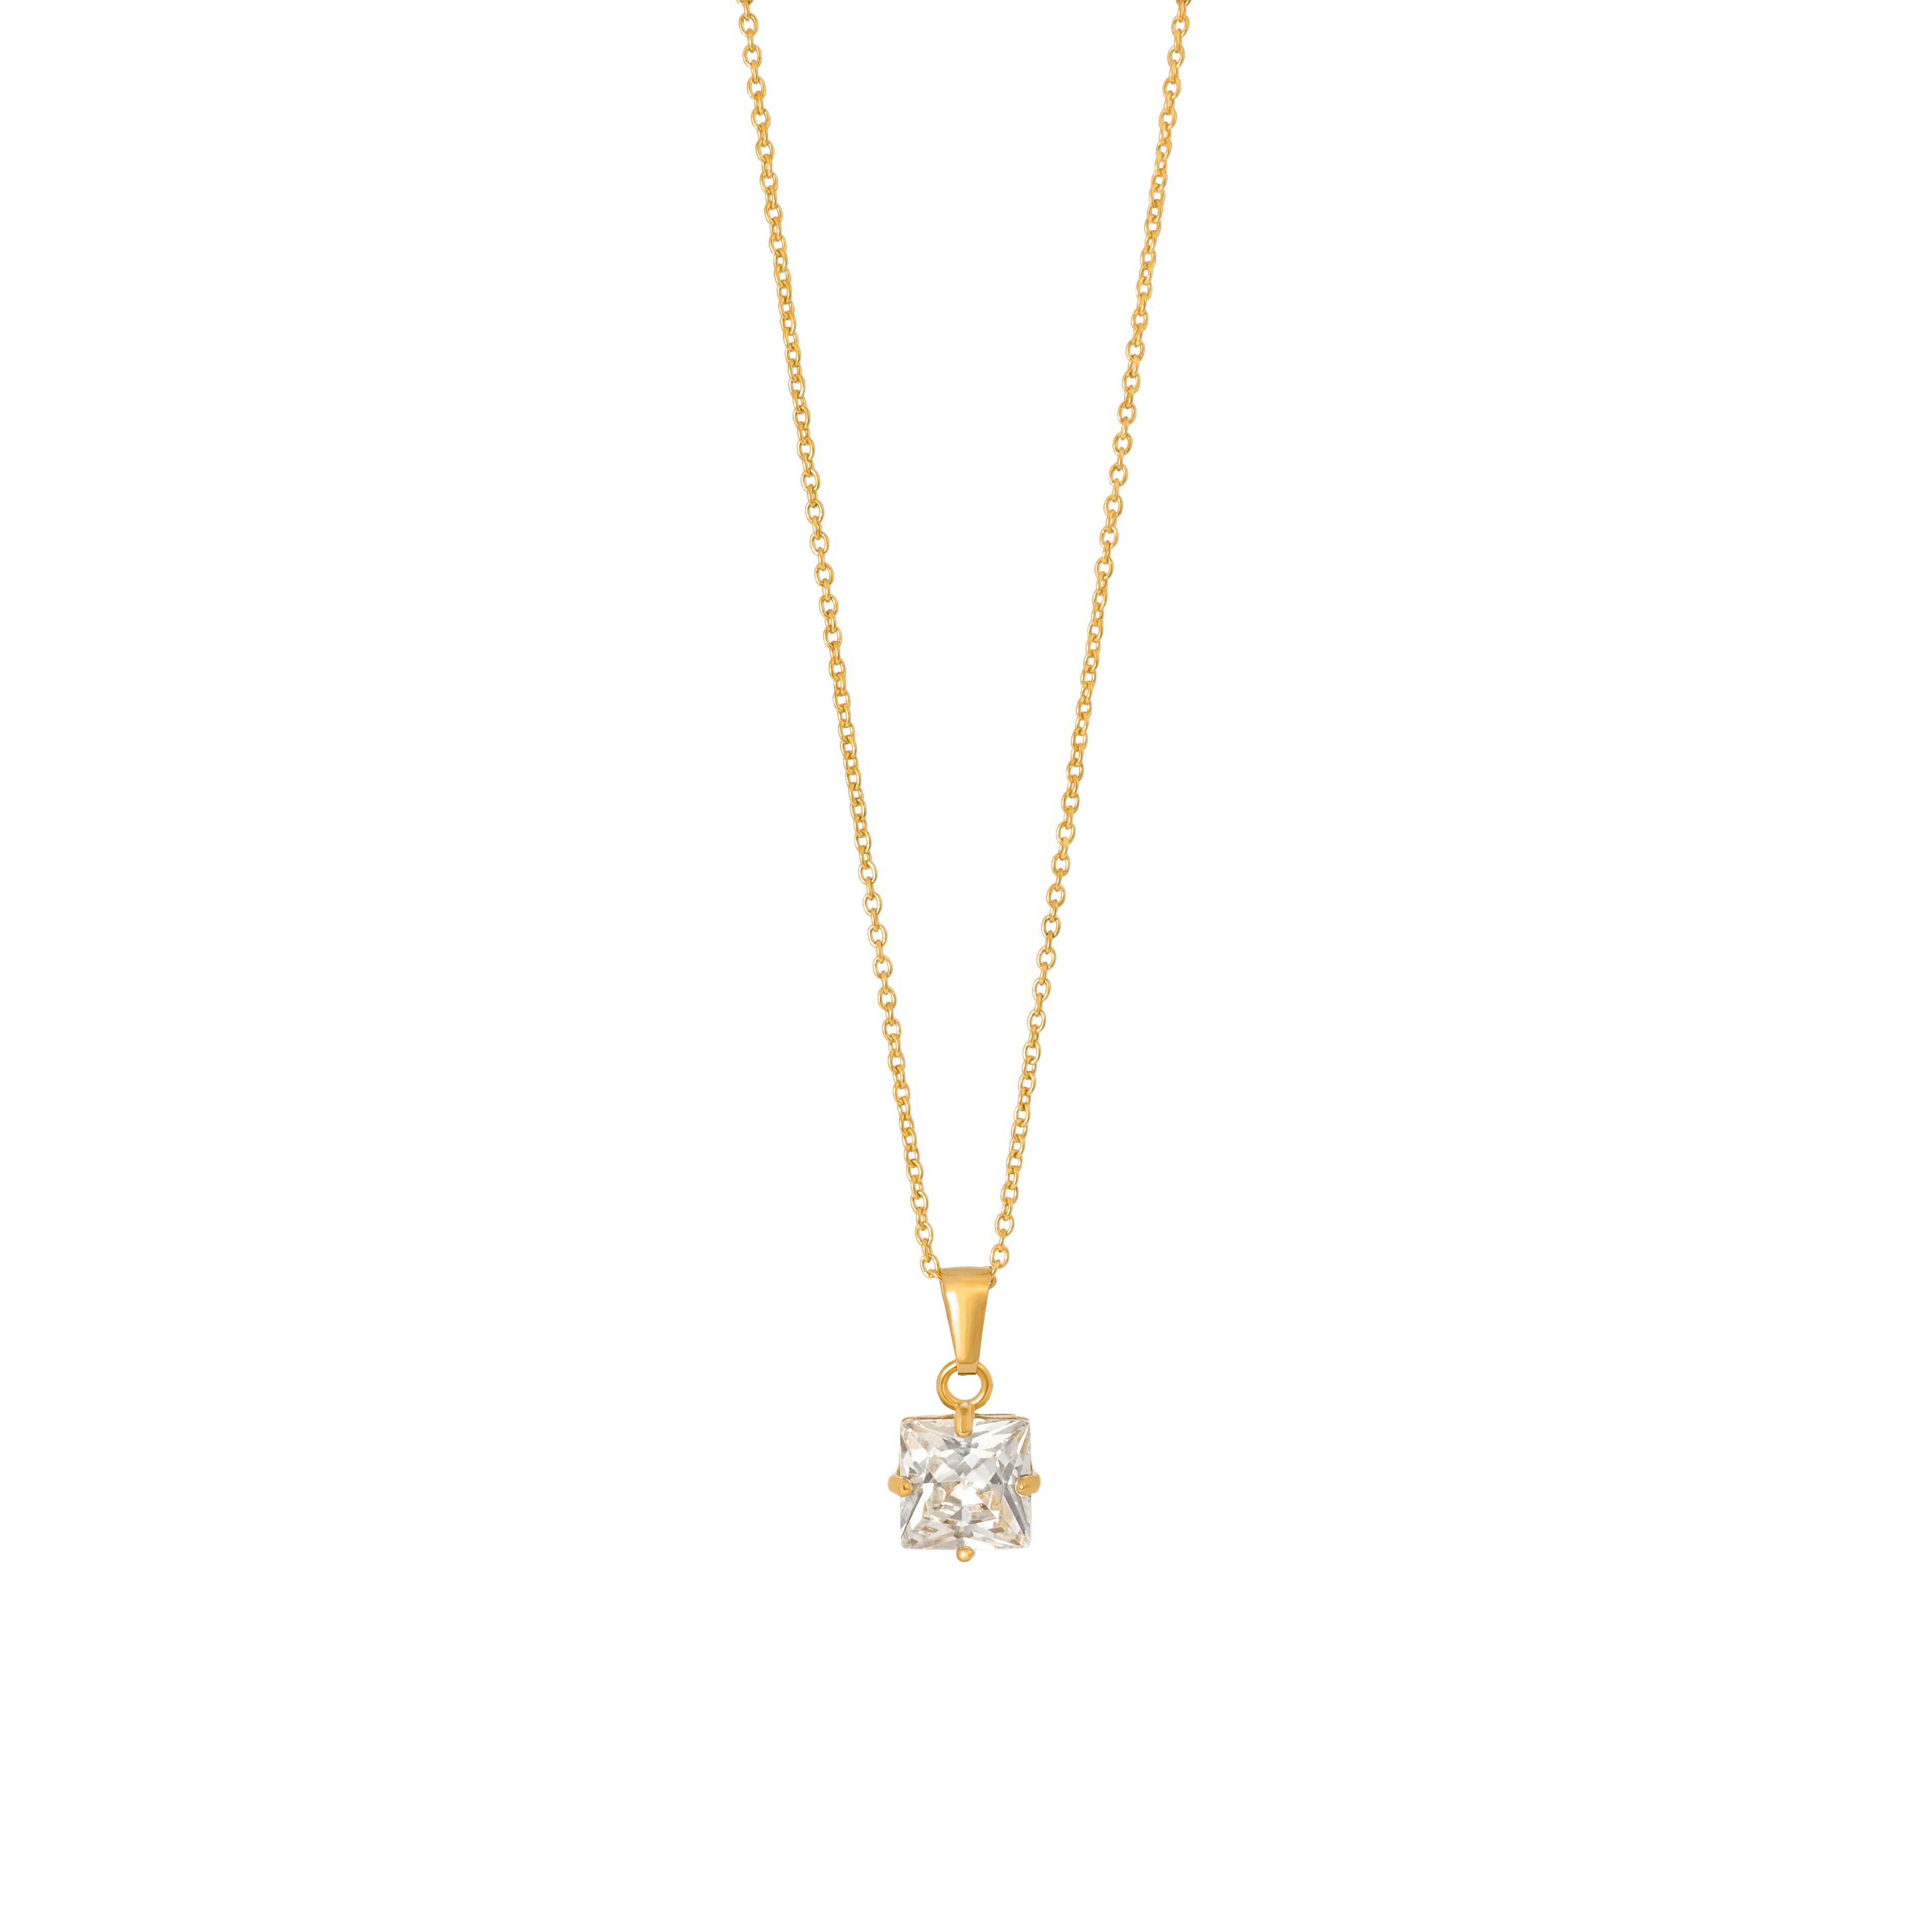 Buy Online Heart Lock Necklace | Narcissa Jewelry